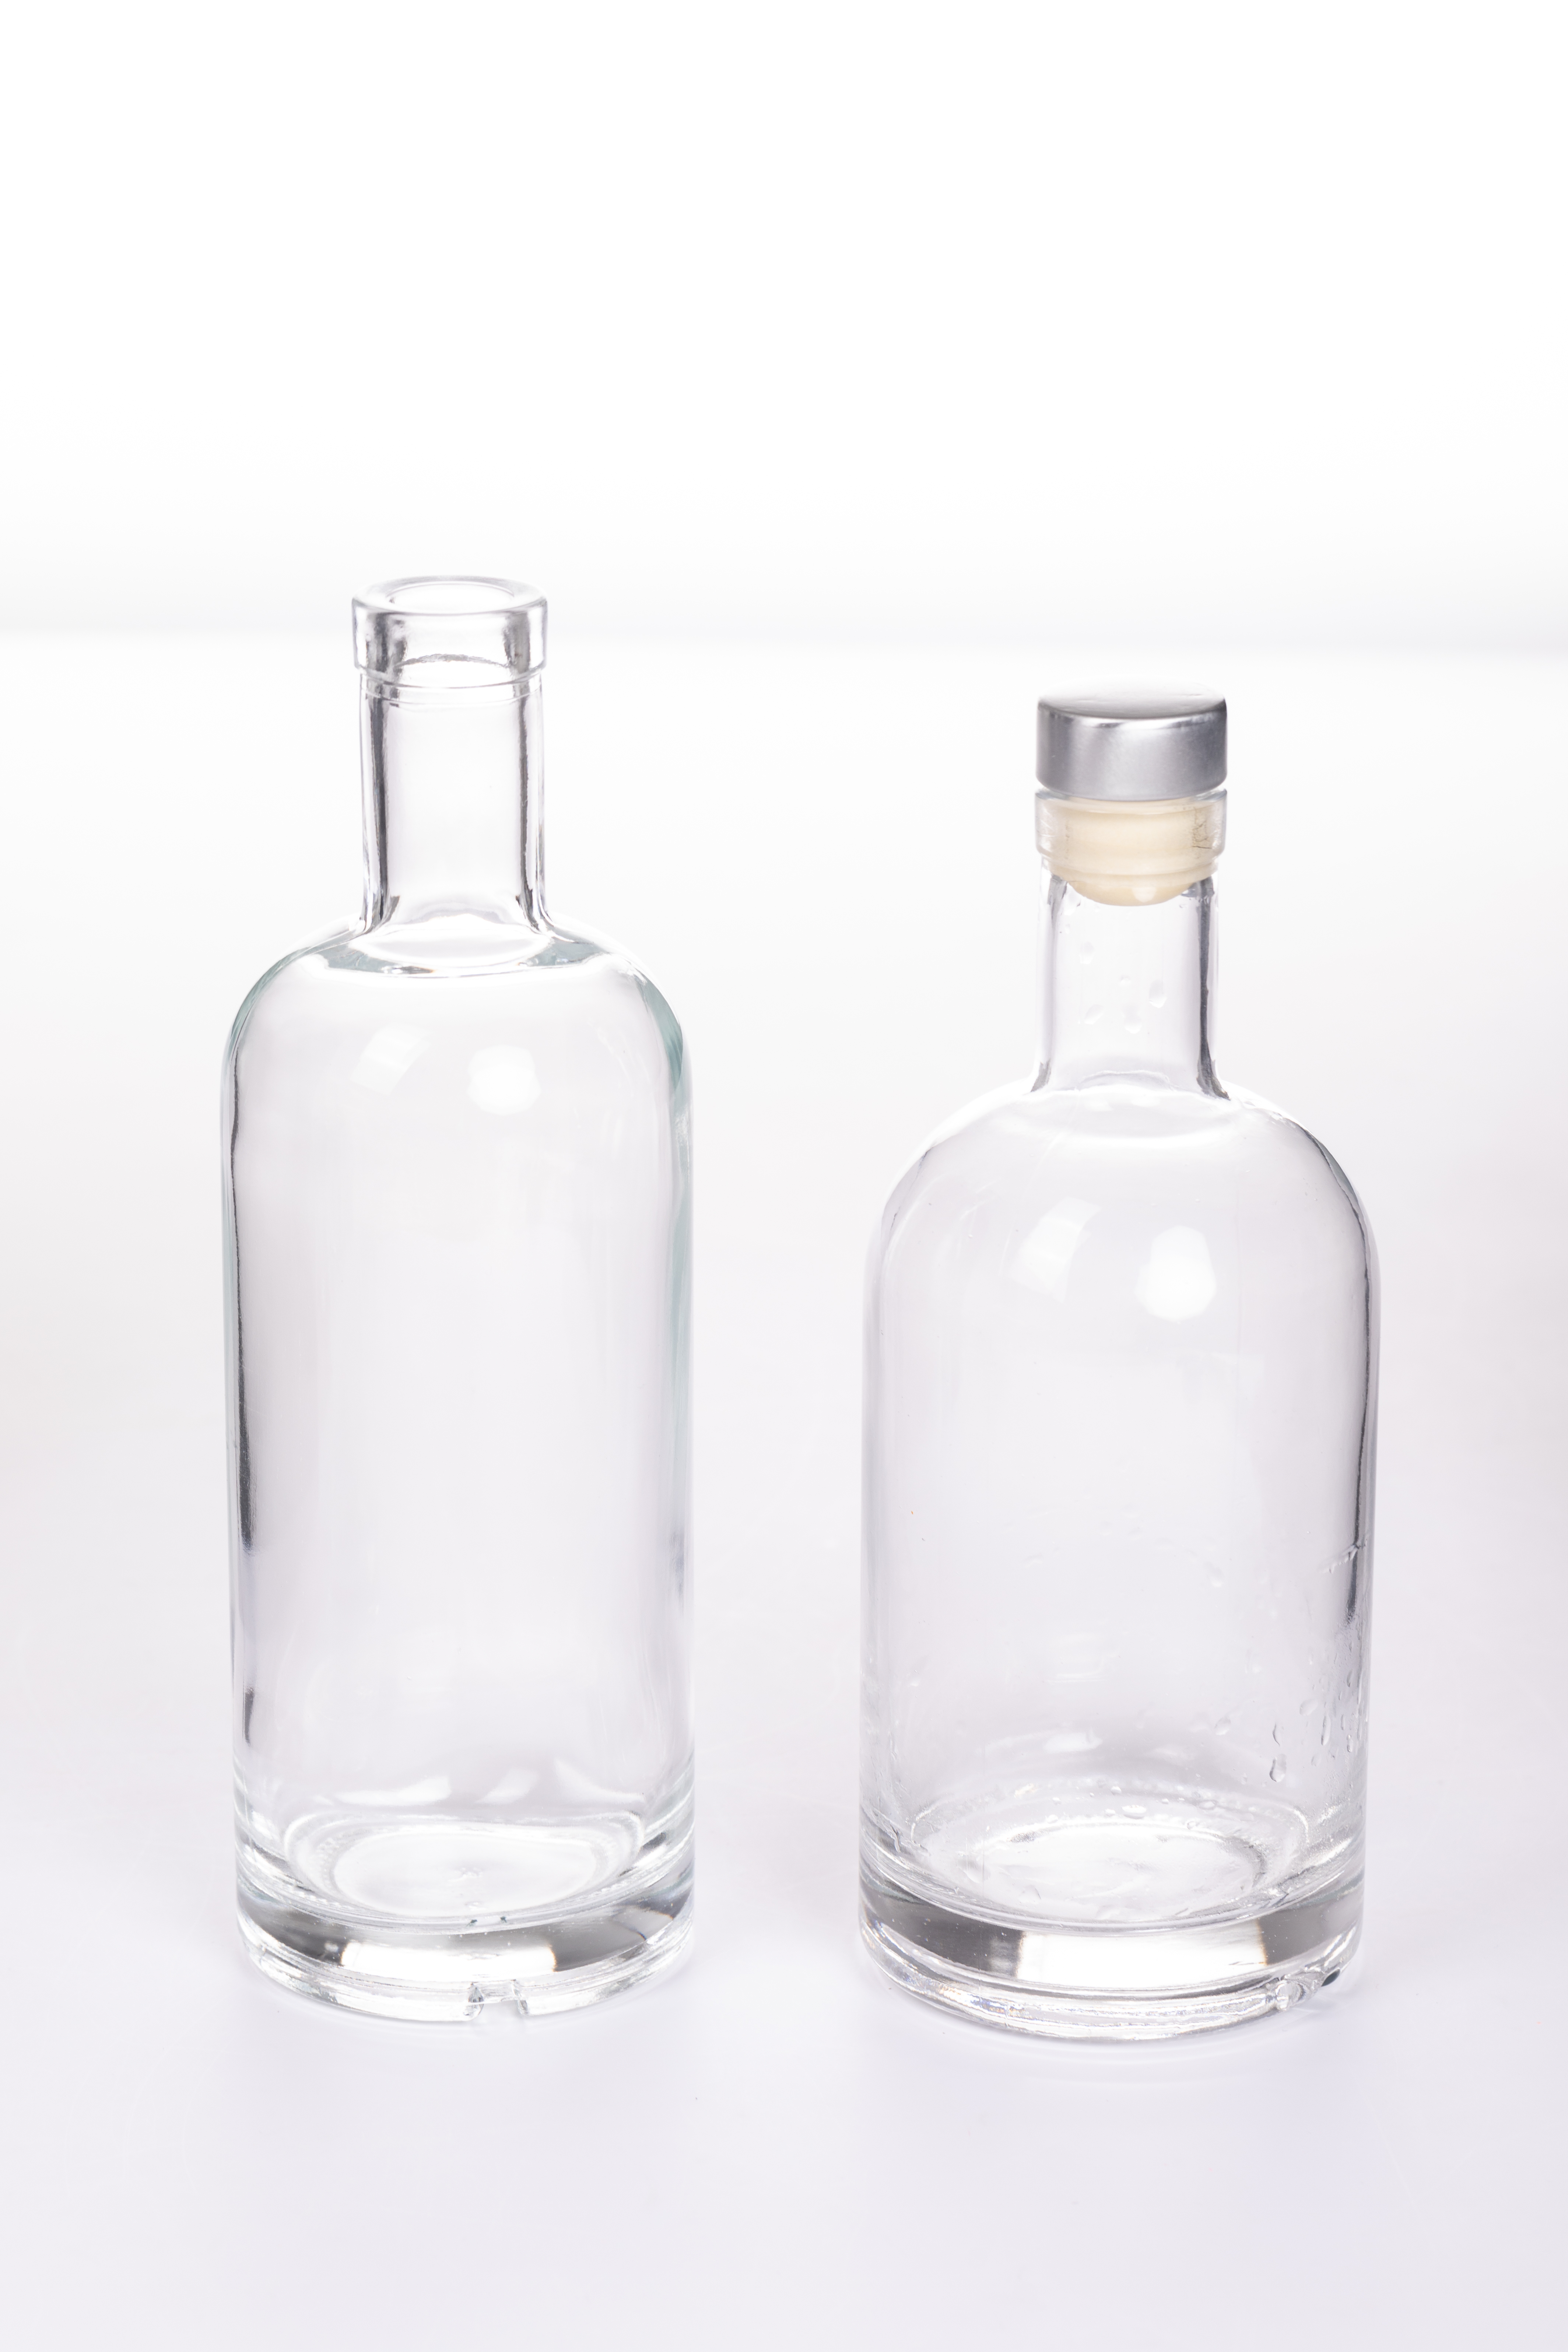 750ml-Glass-Bottle